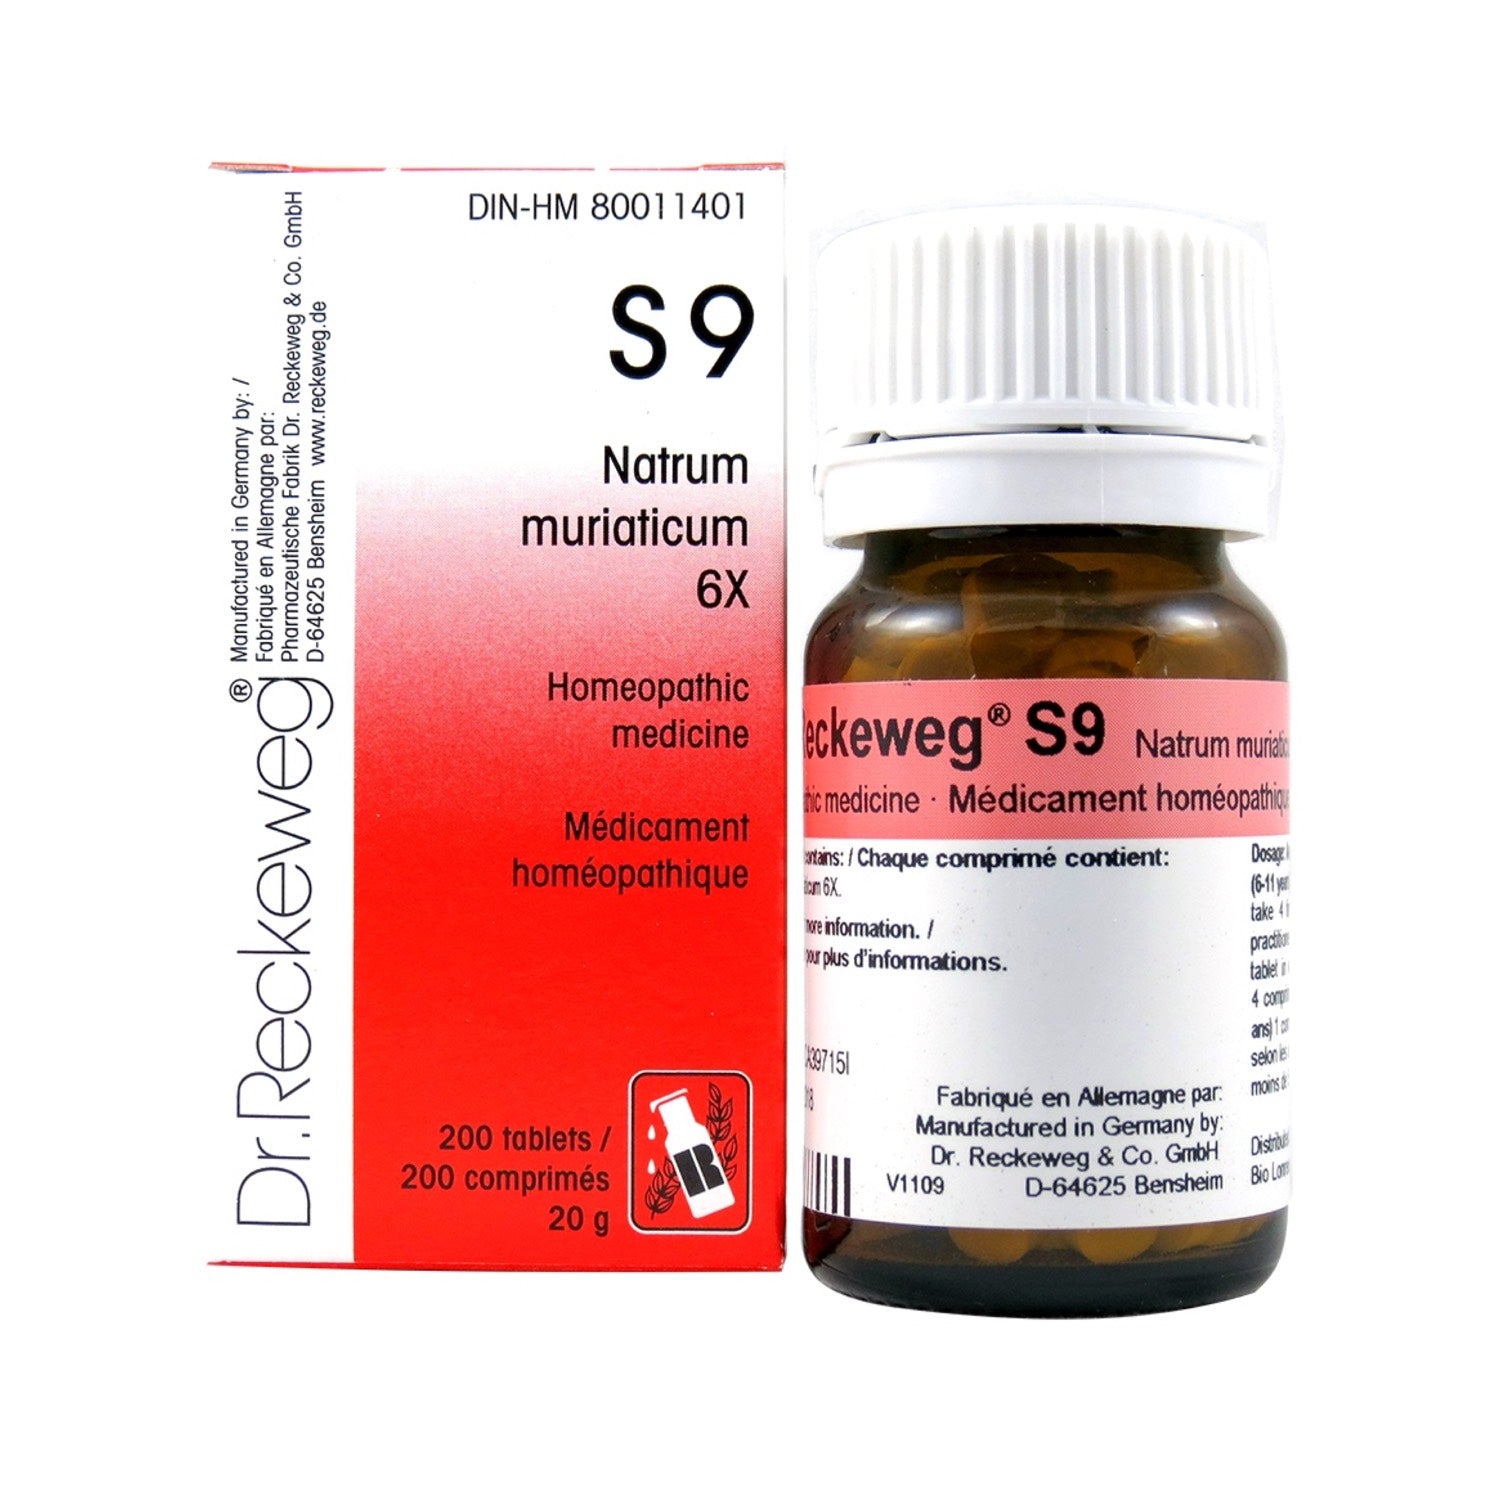 S9 Natrum muriaticum Homeopathic medicine Schuessler salt 6X 200 tablets (20 g) - iwellnessbox